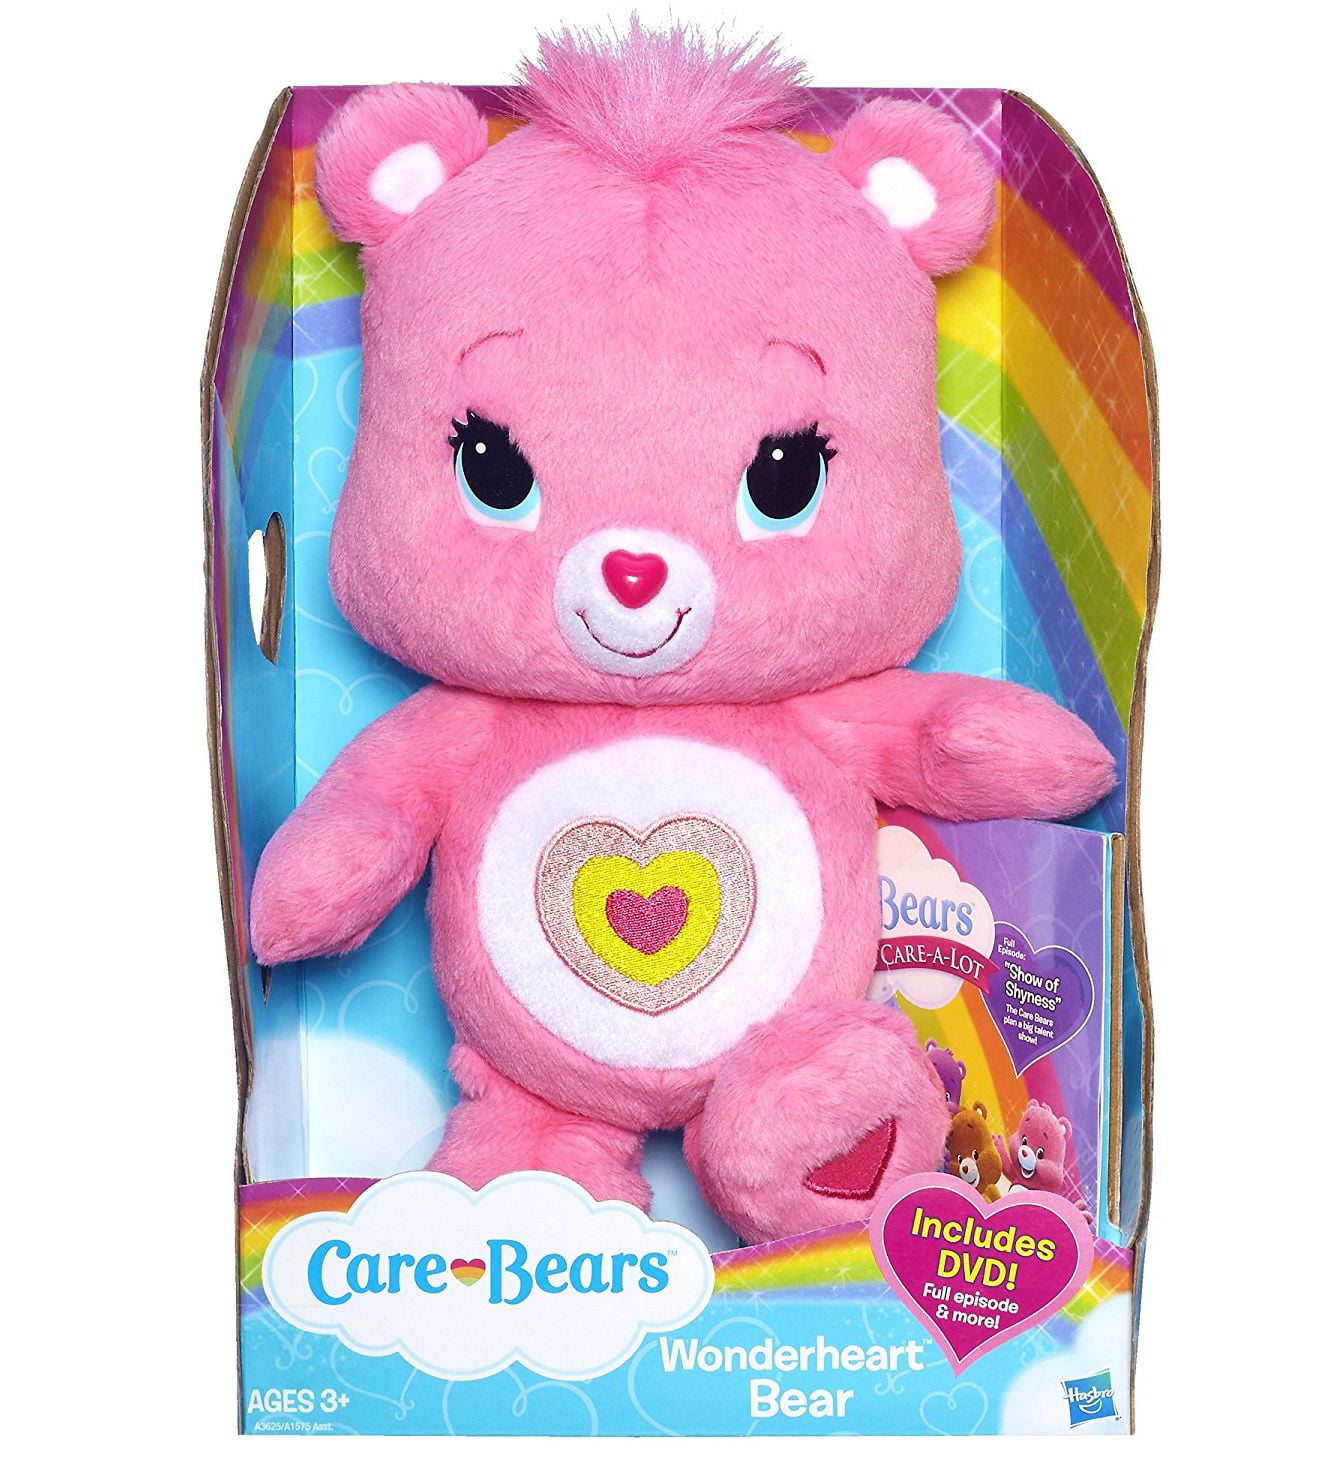 Care Bears Wonderheart Bear - Walmart 